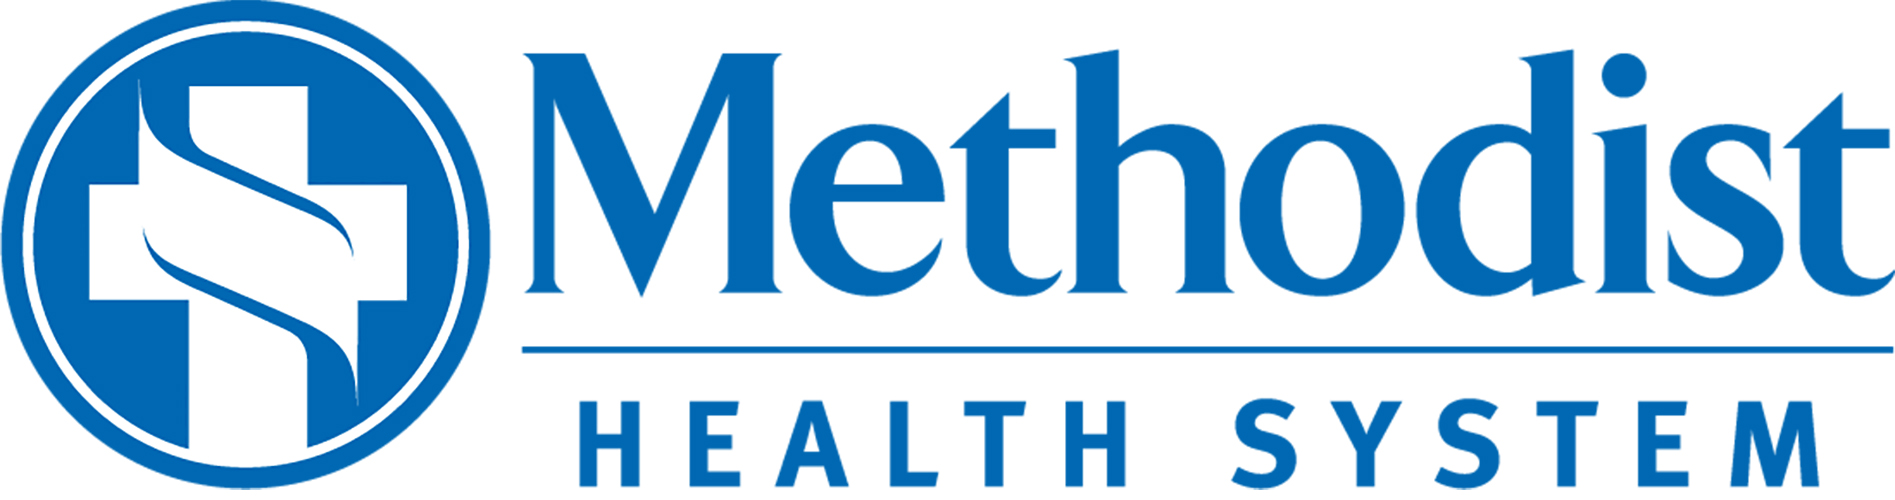 410 Methodist Medical Group logo